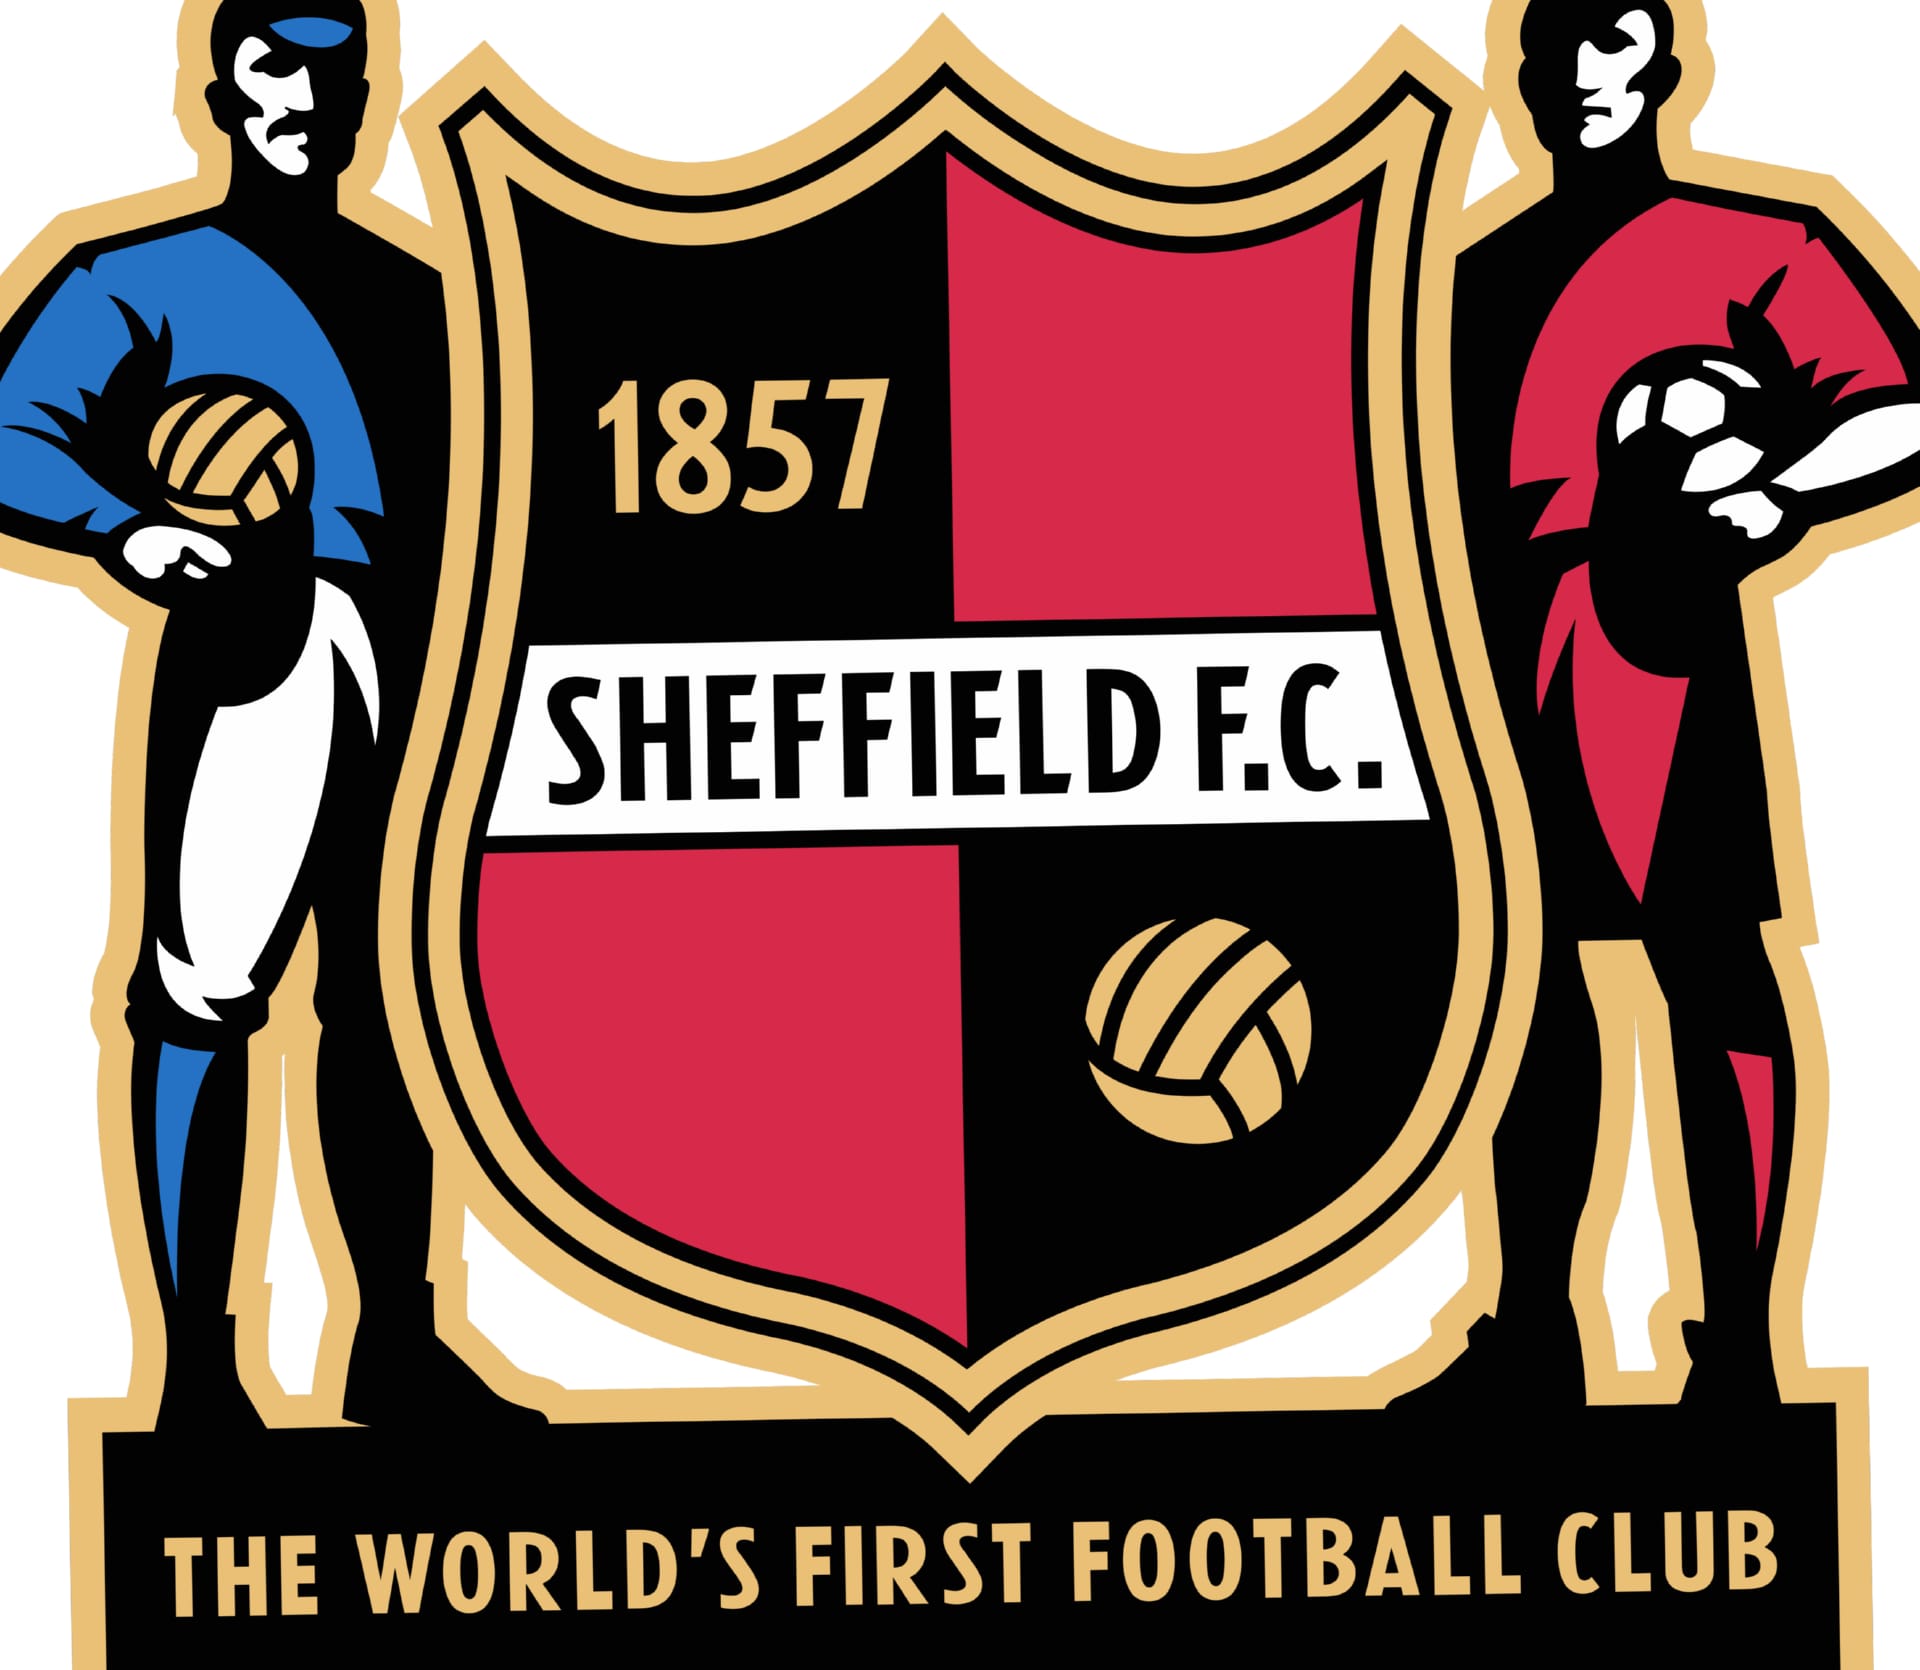 Sheffield F.C at 2048 x 2048 iPad size wallpapers HD quality